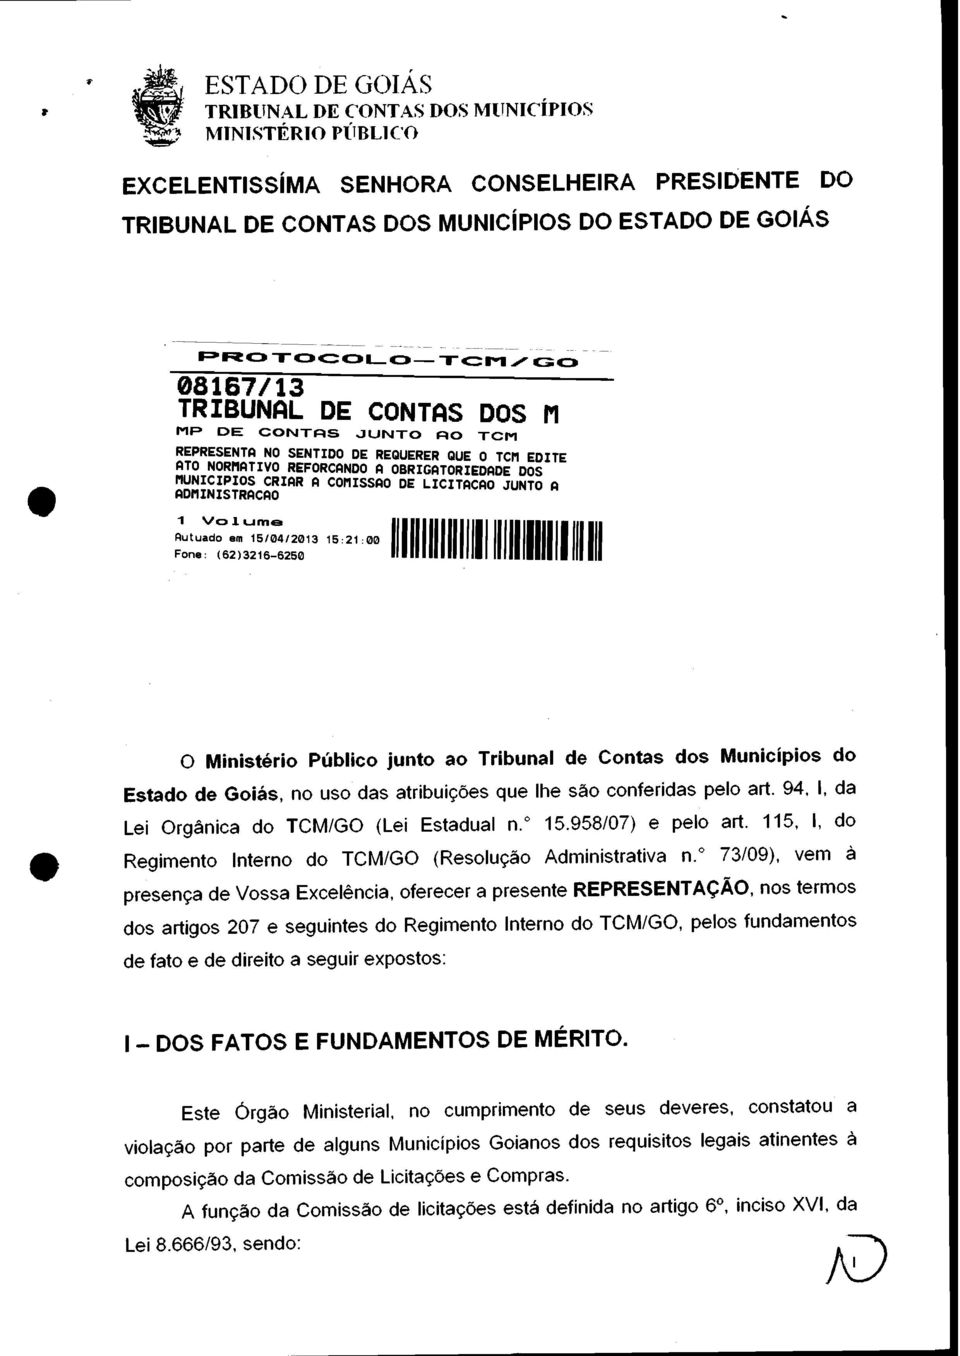 COMISSAO DE LICITACAO JUNTO A ADMINISTRACAO ;:%:: 13 15: 21 : 00 111111111111 1111111111111111 111111 o Ministério Público junto ao Tribunal de Contas dos Municípios do Estado de Goiás, no uso das